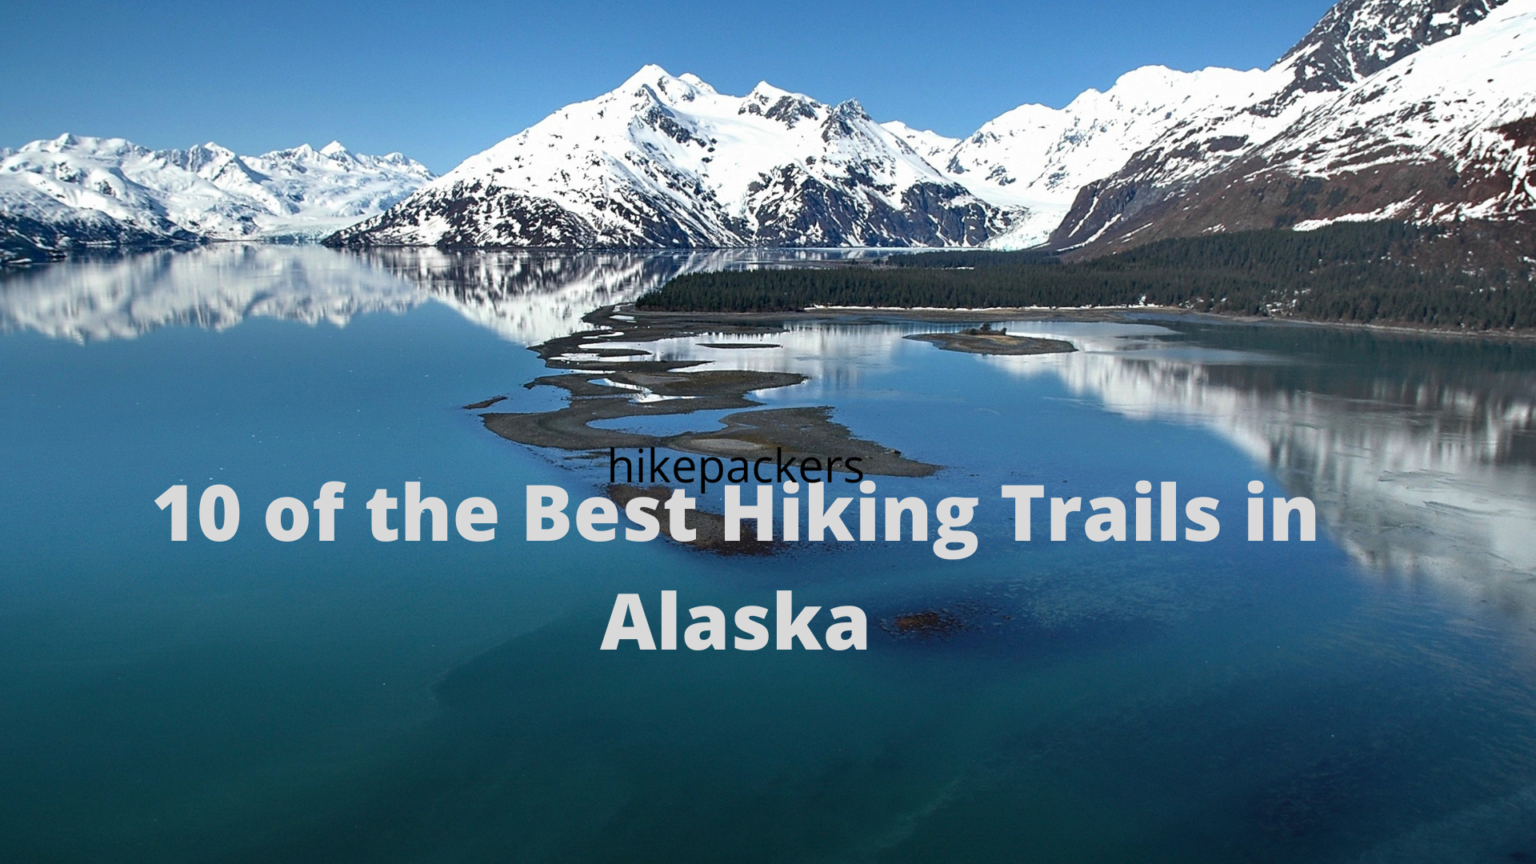 Find Best Hiking Trails In Alaska Hikepackers